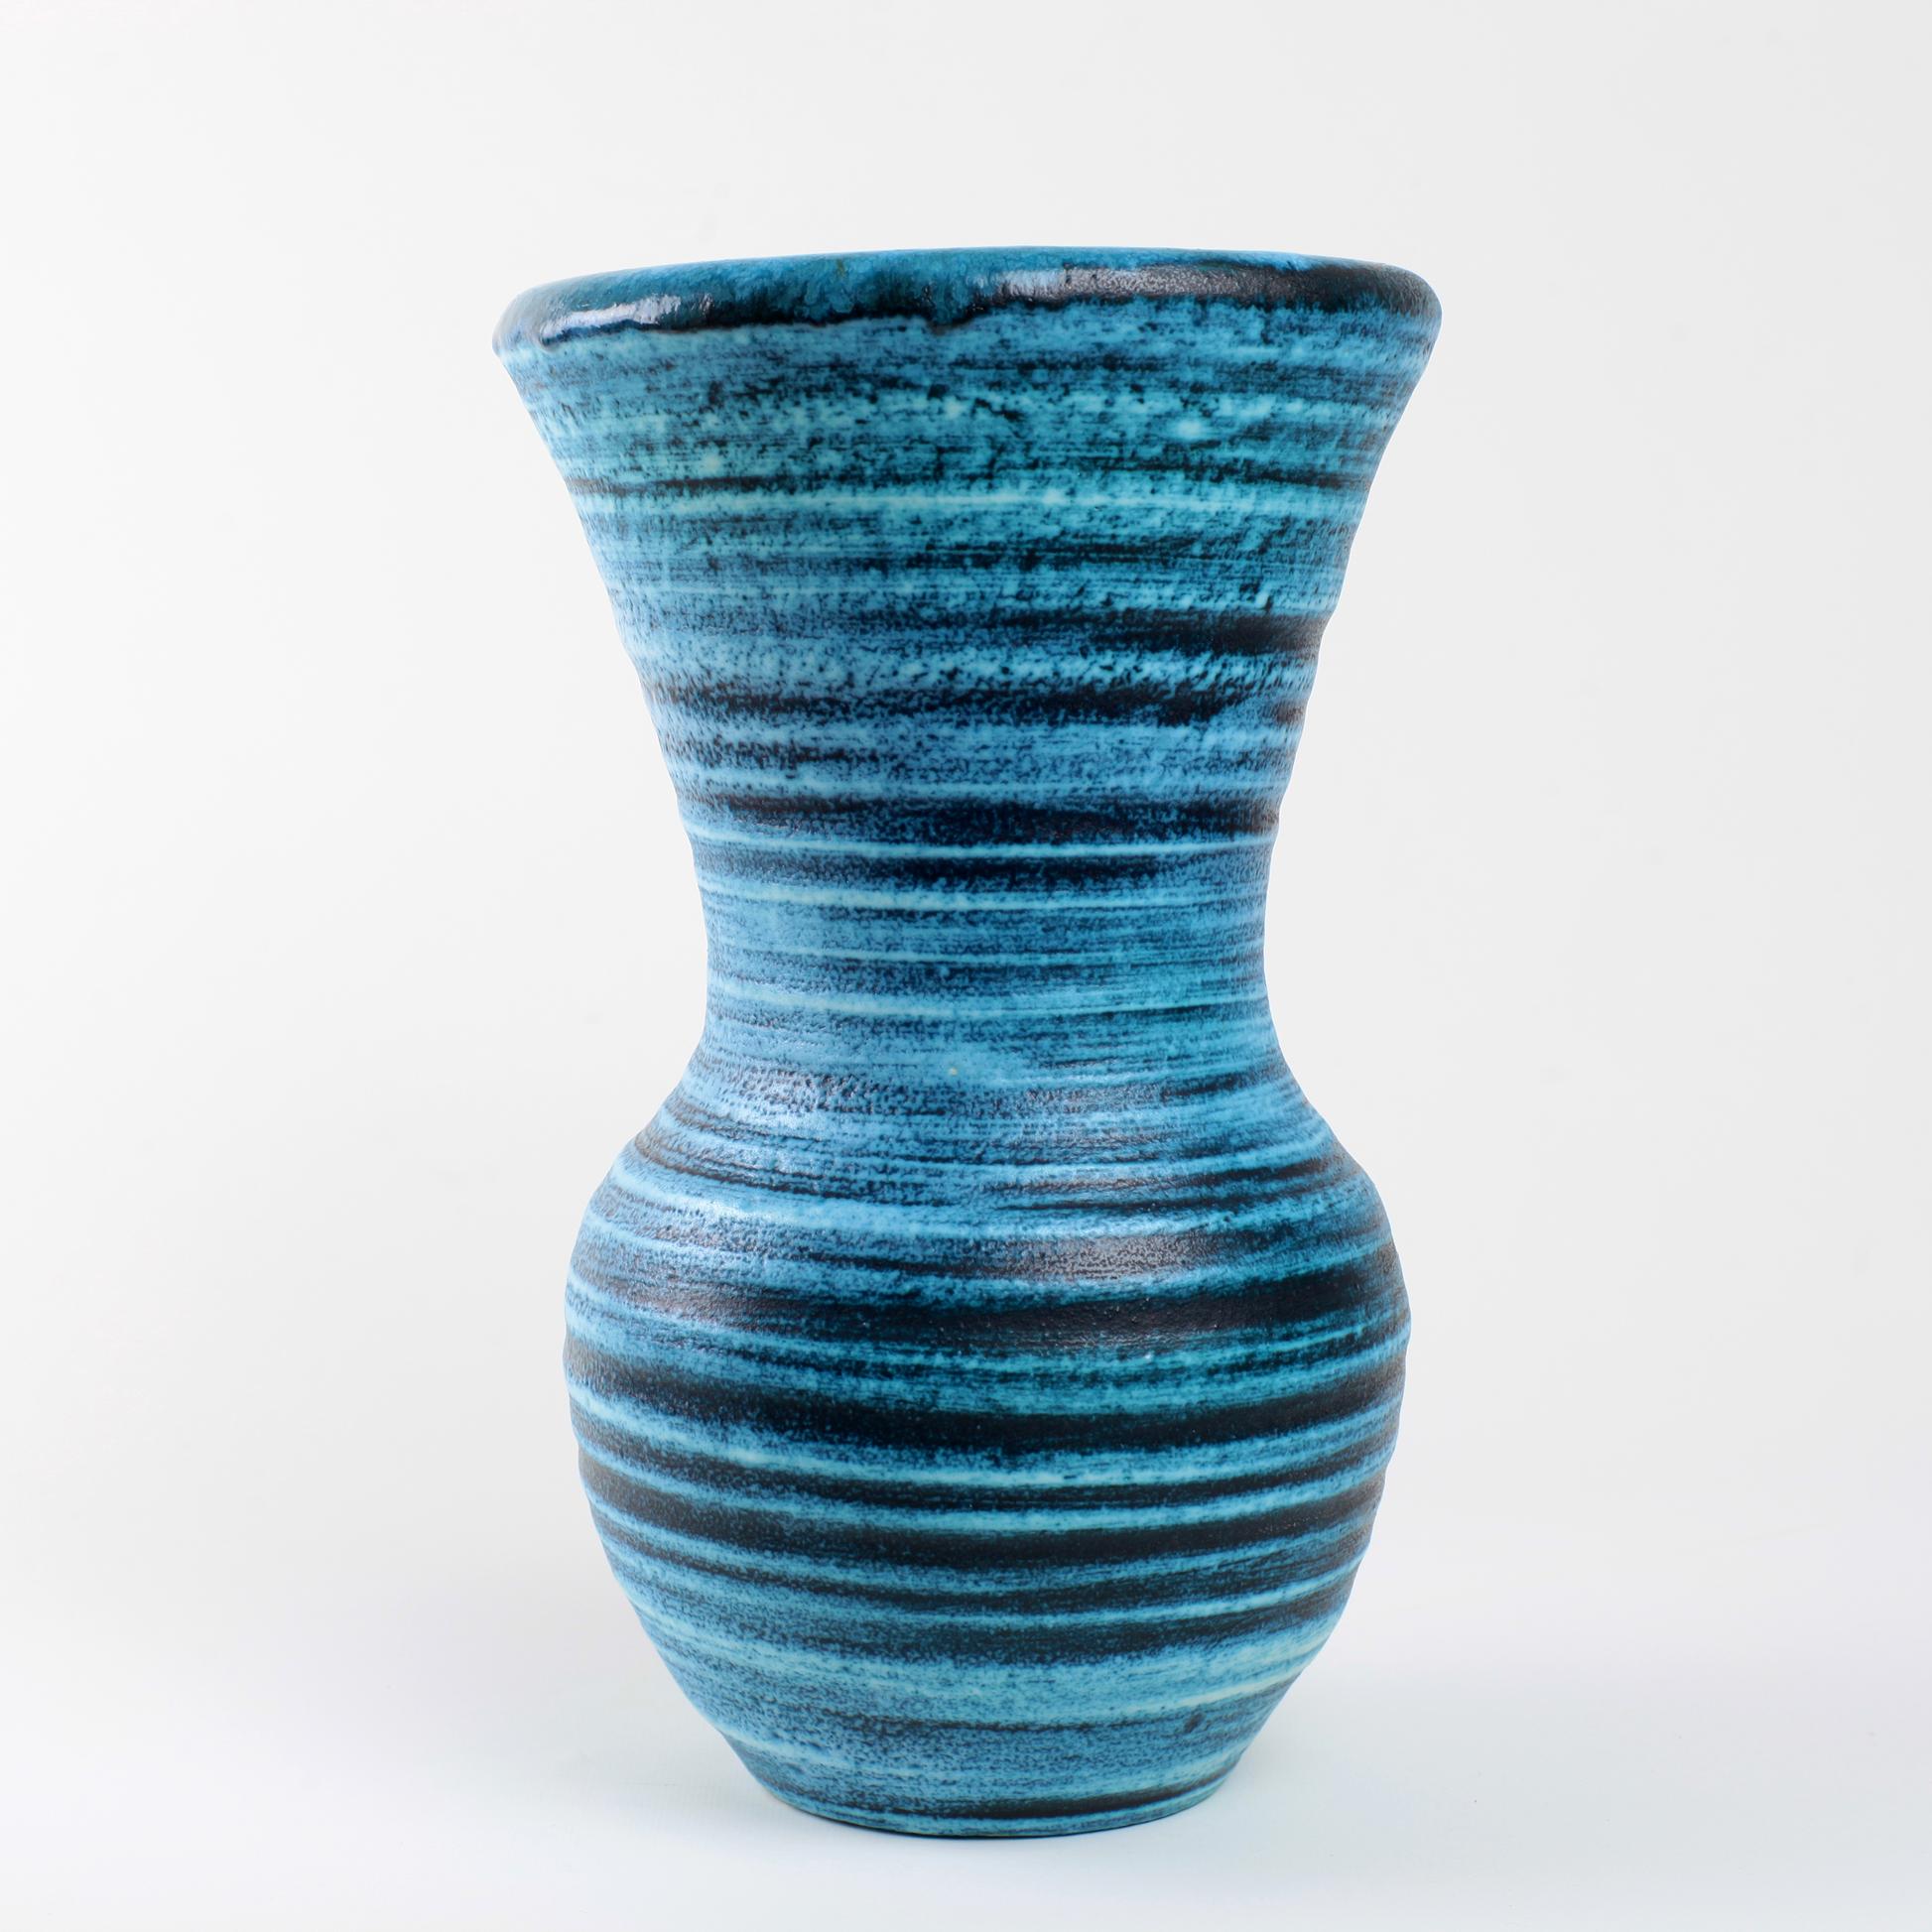 Gauloise blue ceramic vase by Accolay, France, circa 1960.